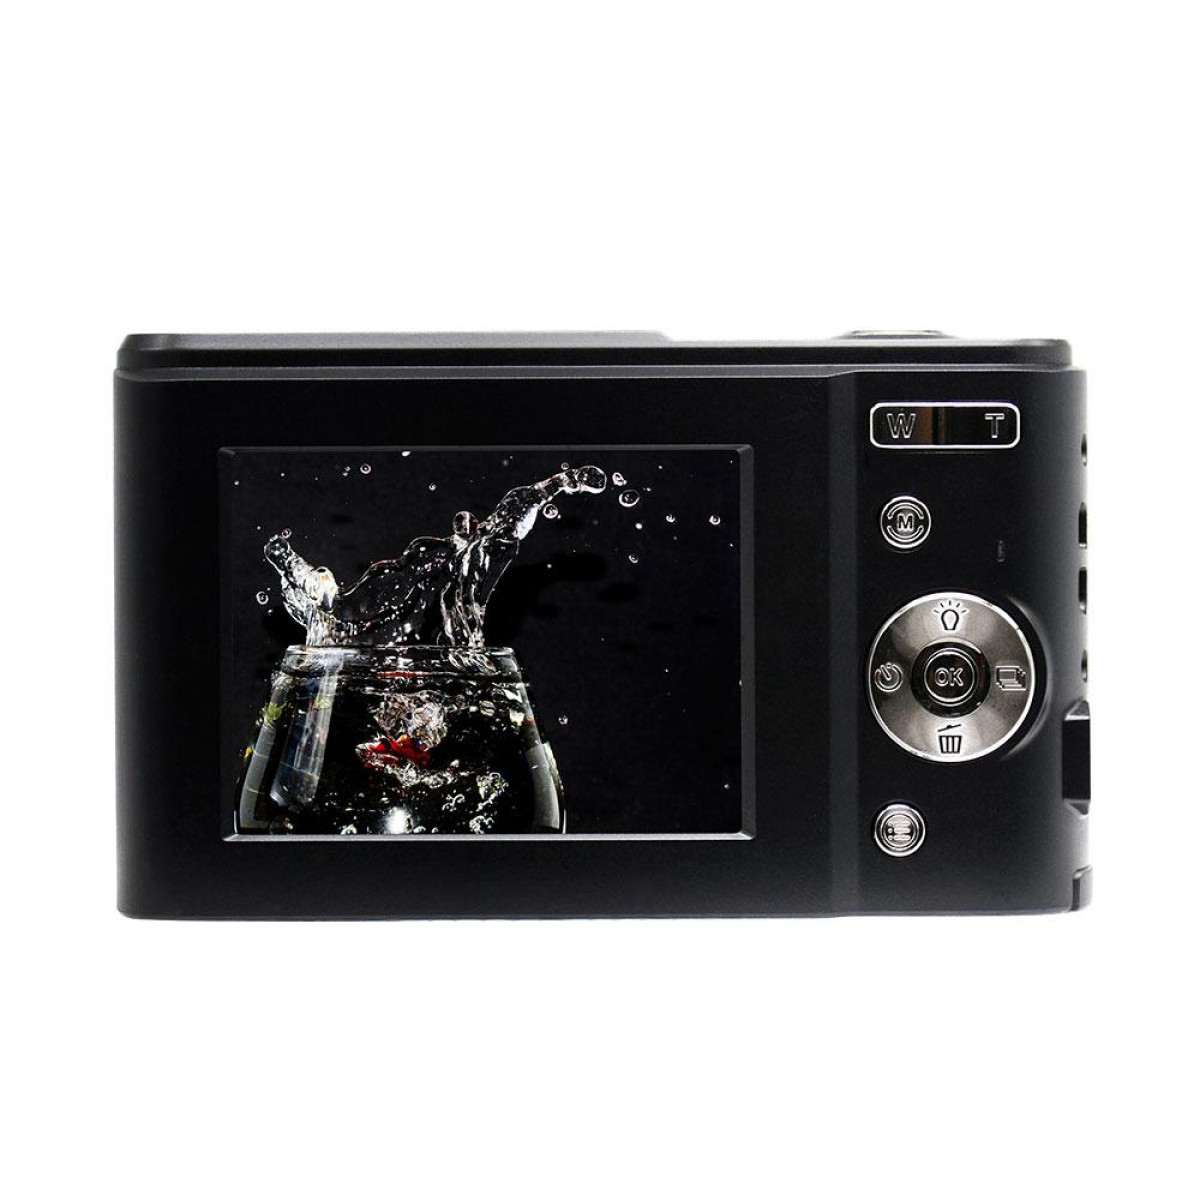 INF Digitalkamera 1080P / 48 / 16-facher Megapixel Zoom schwarz- Digitalkamera